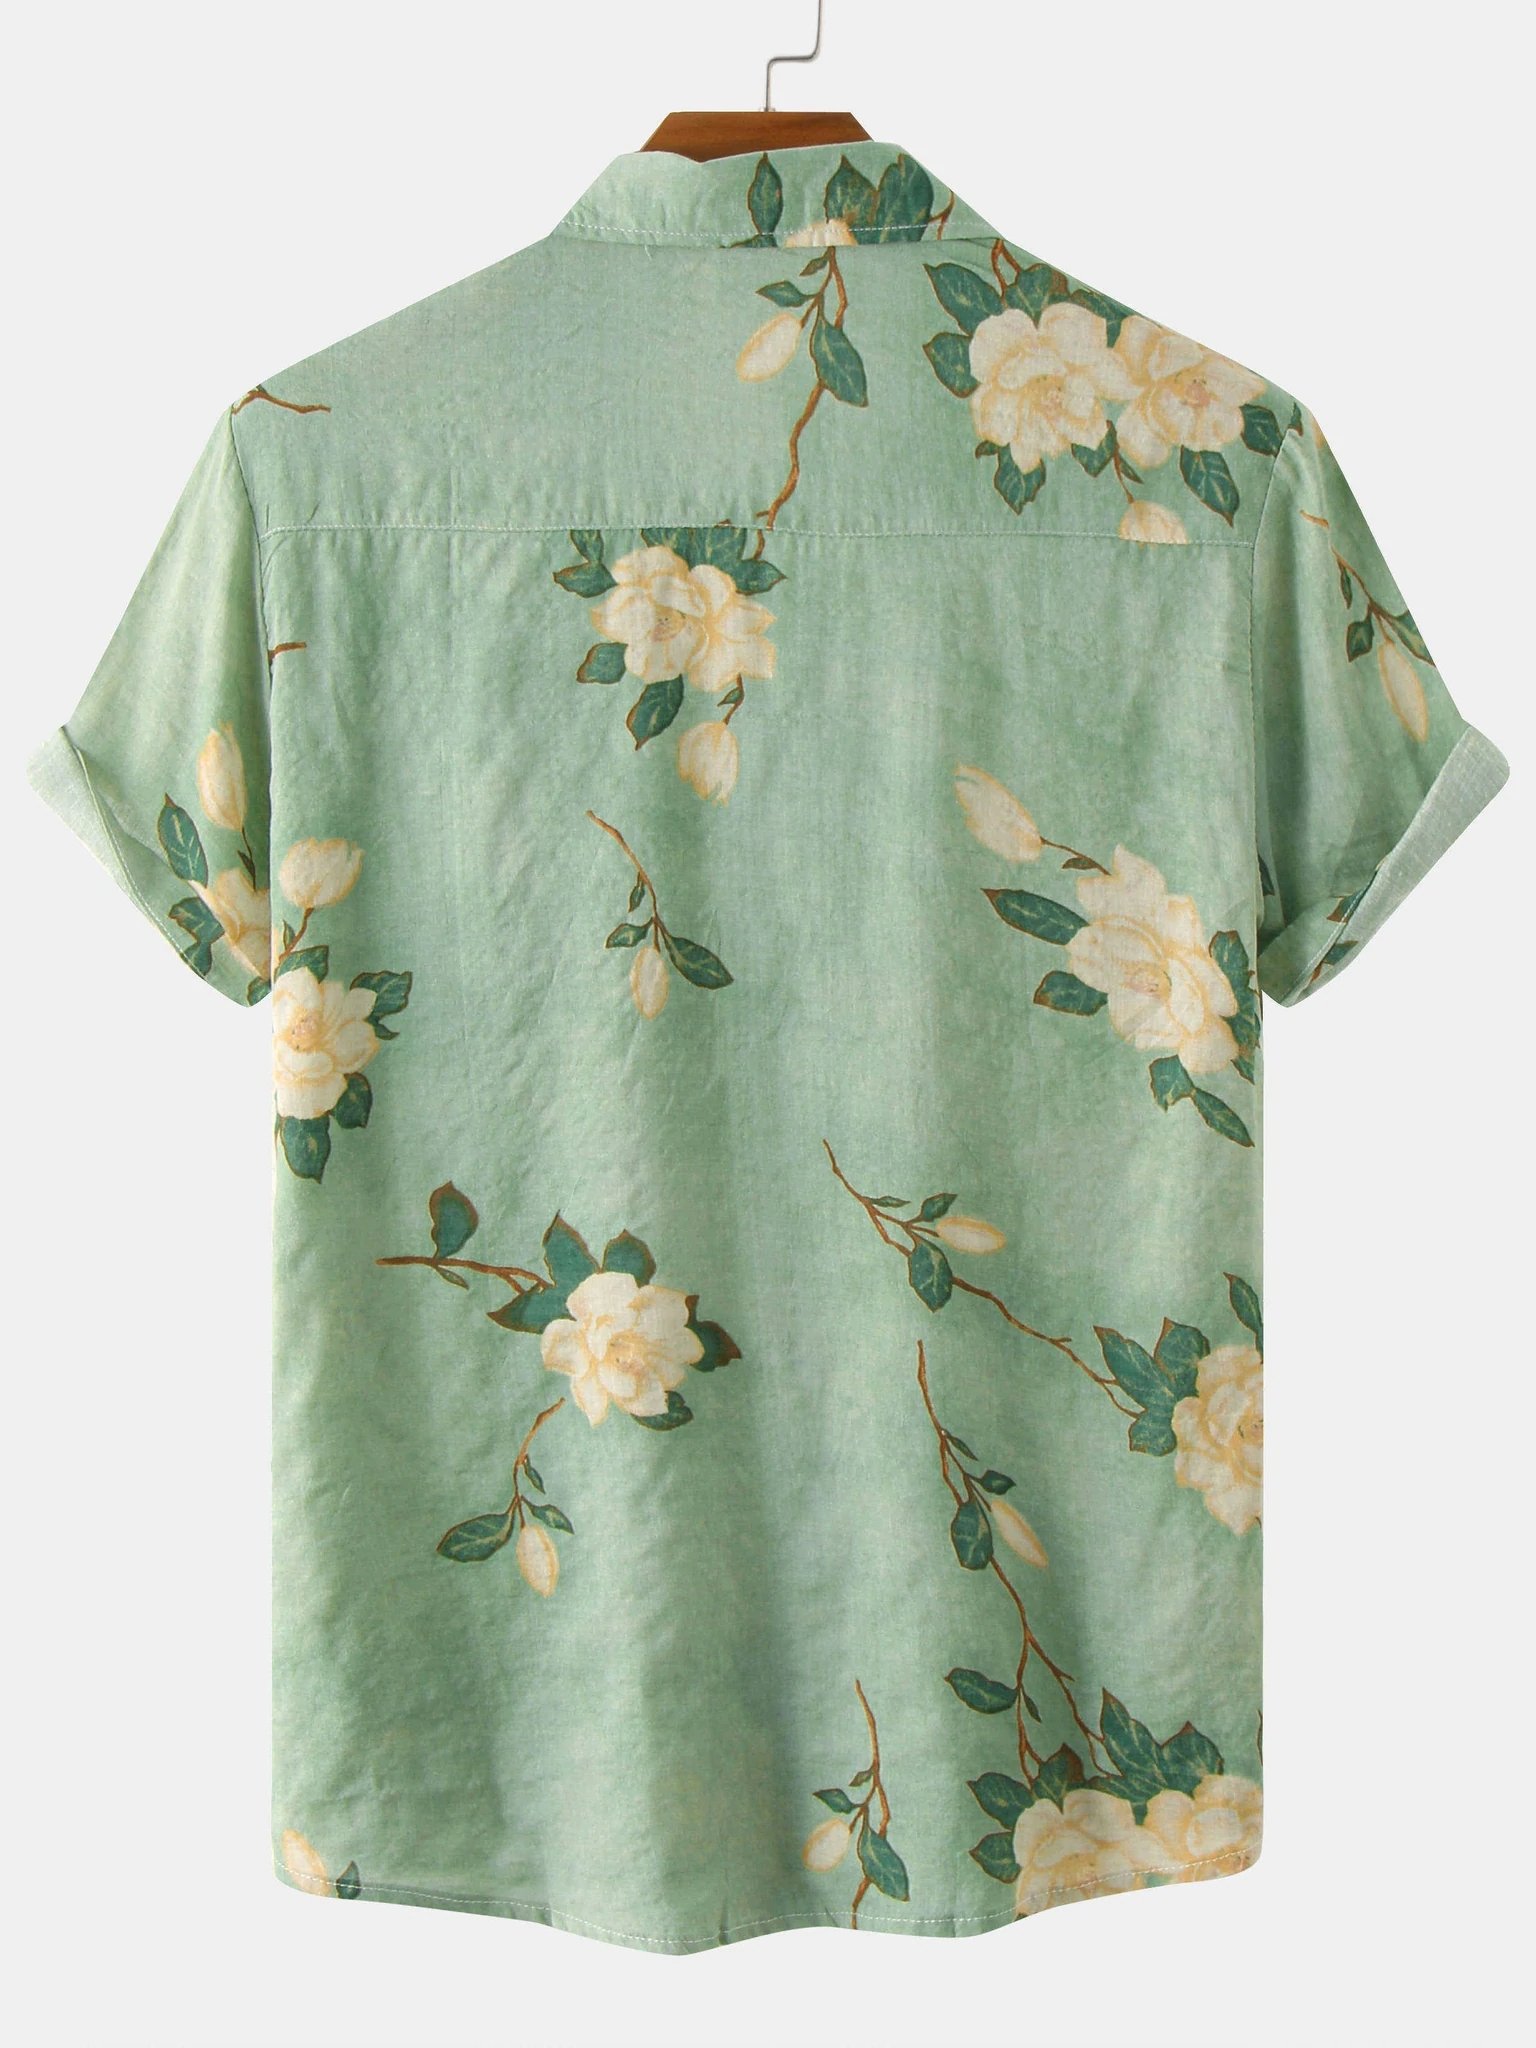 Cotton and Linen Style American Casual Plant Flower Versatile Linen Shirt